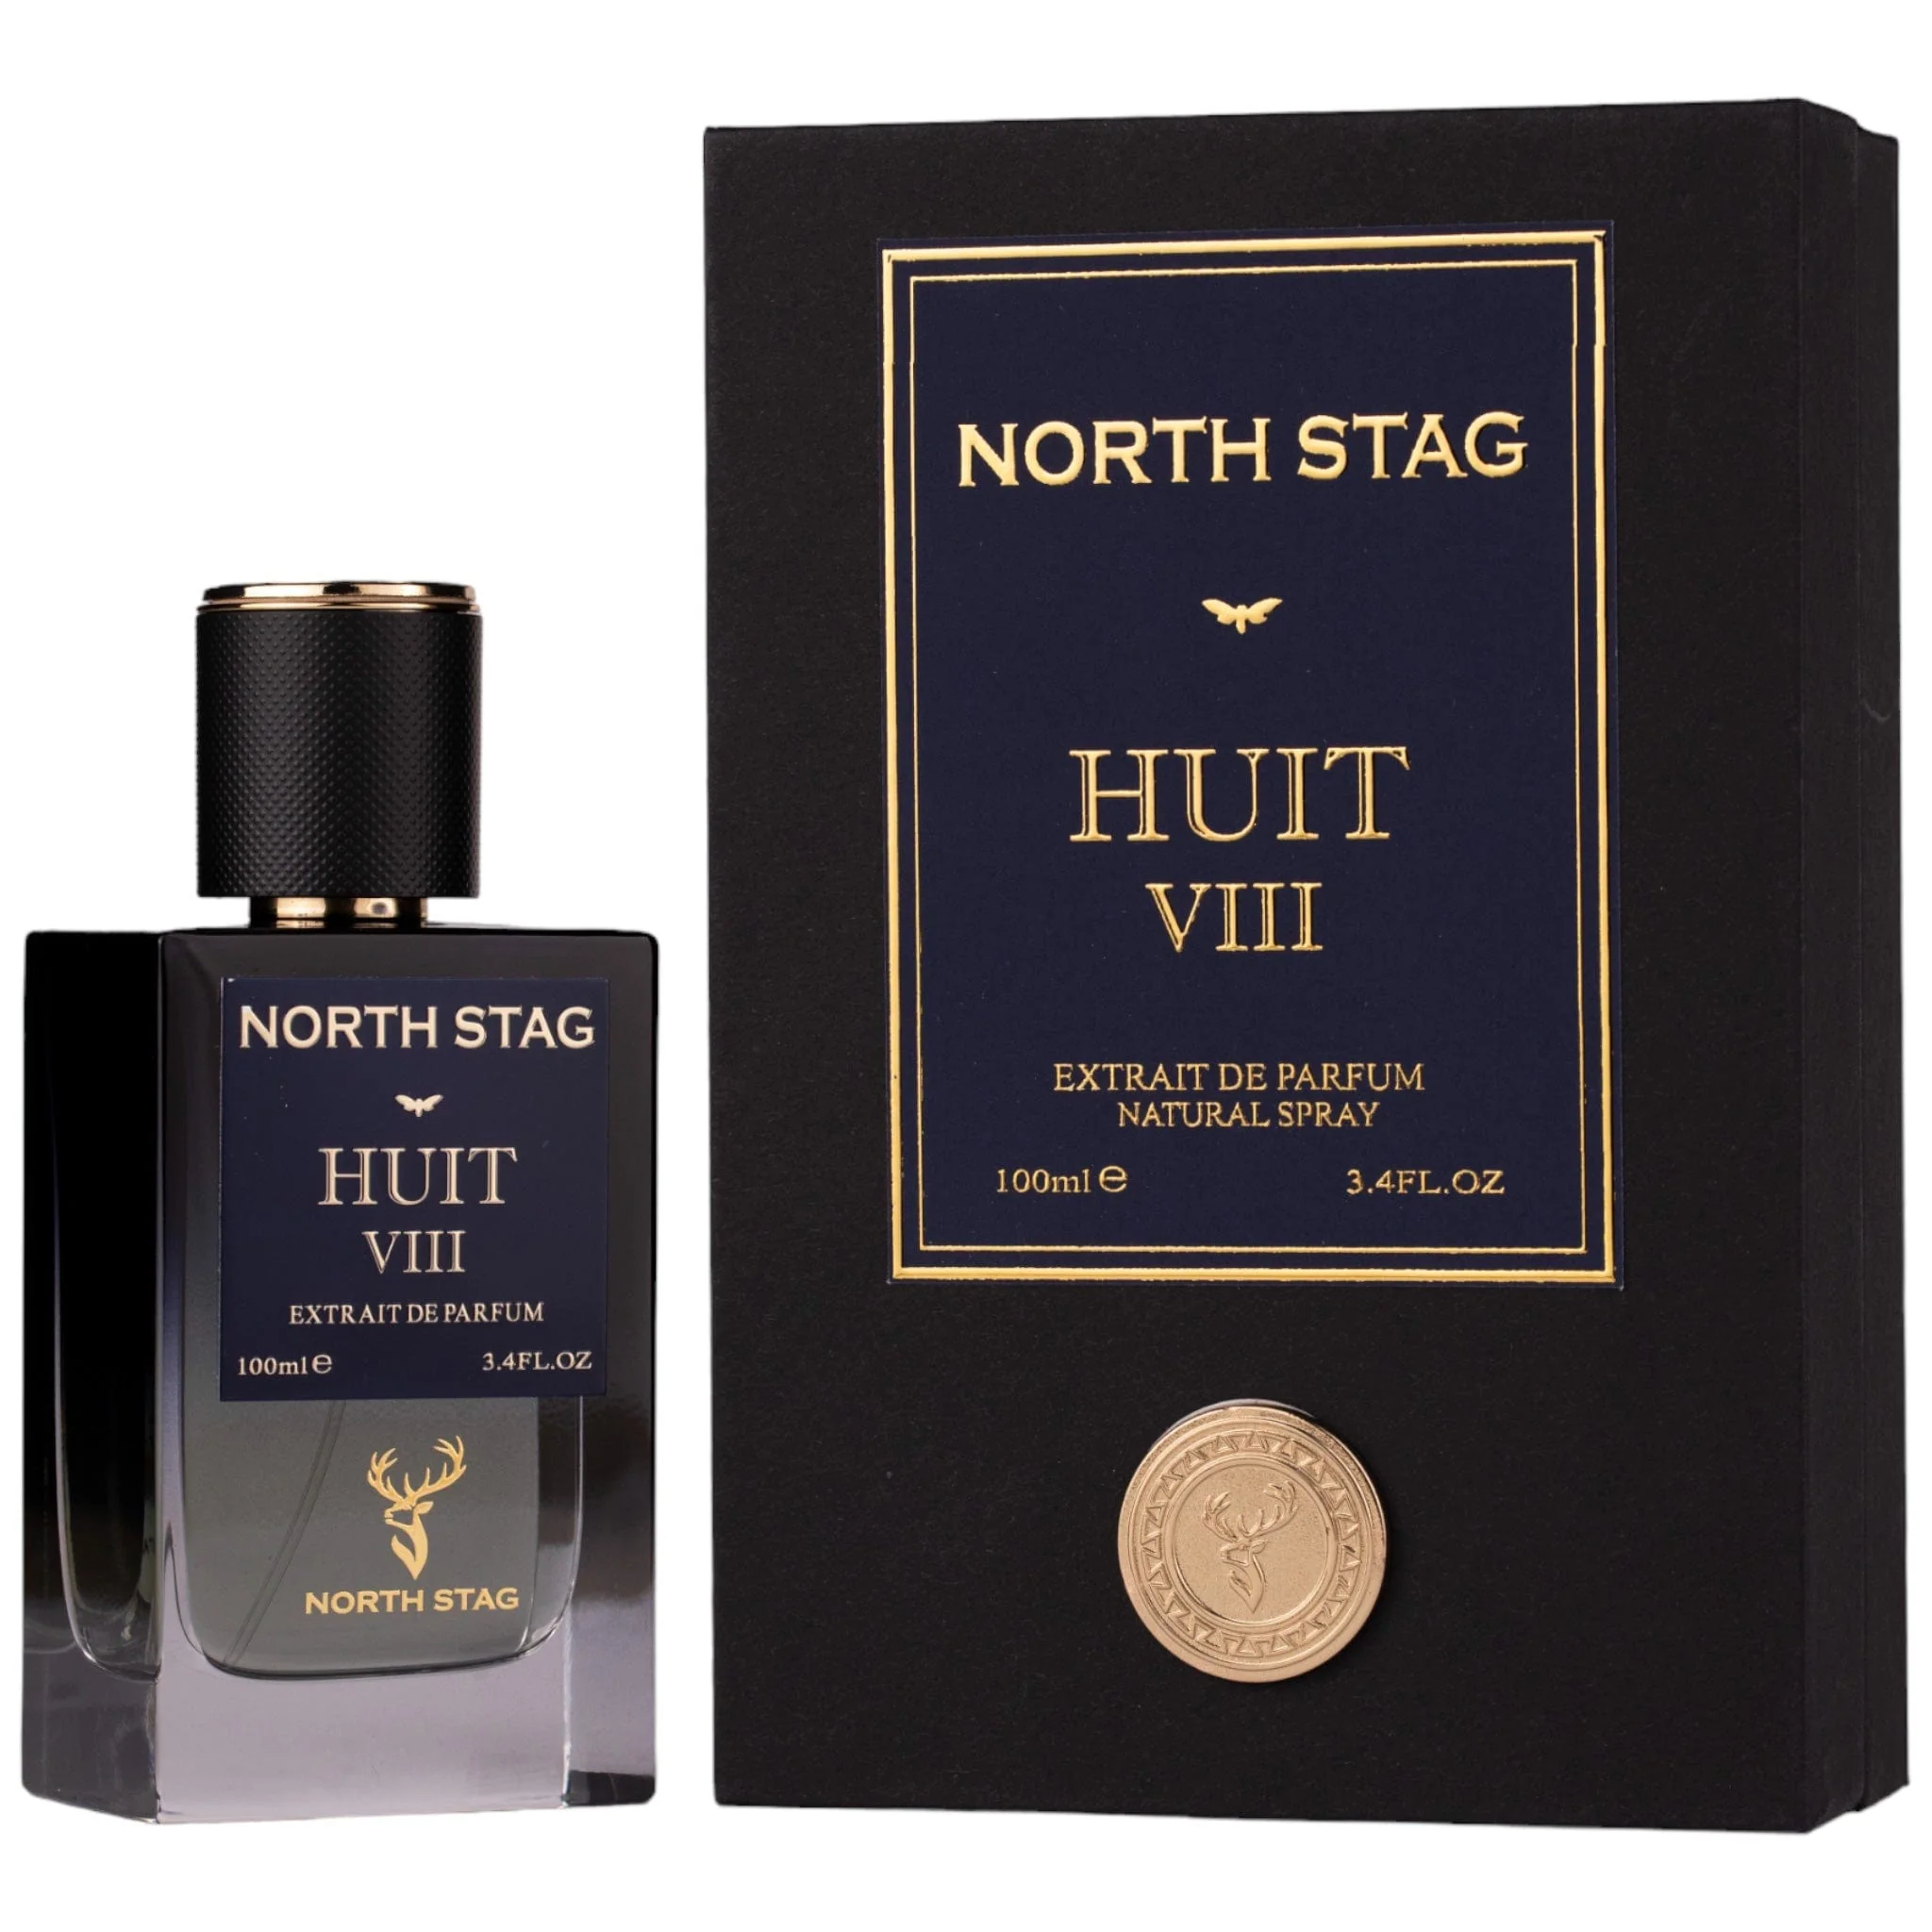 north stag huit viii